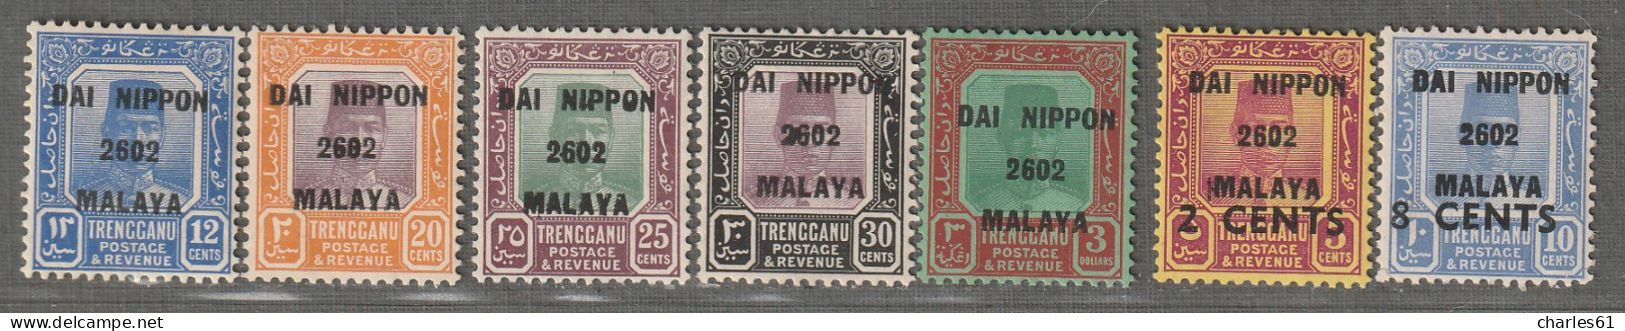 TRENGGANU - OCCUPATION JAPONAISE - N°29/35 * (1942) "Dai Nippon 2602 Malaya" - Occupation Japonaise